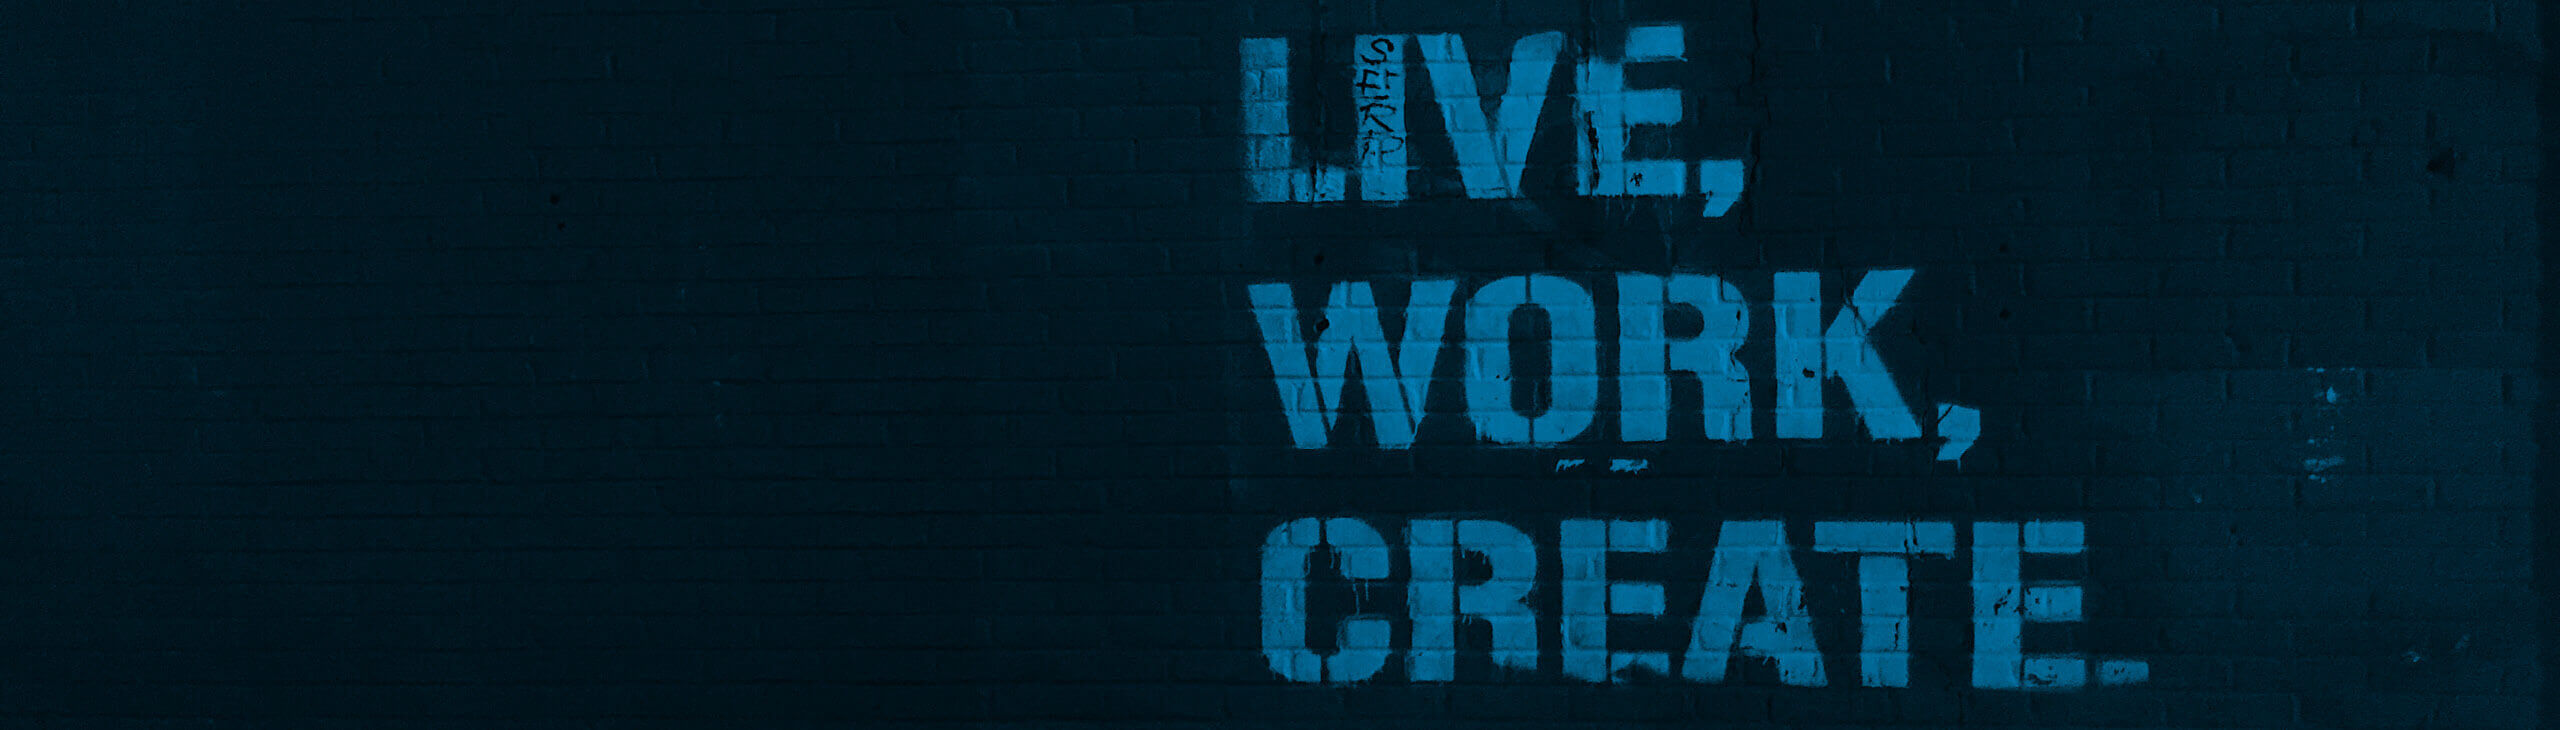 Live, work, create